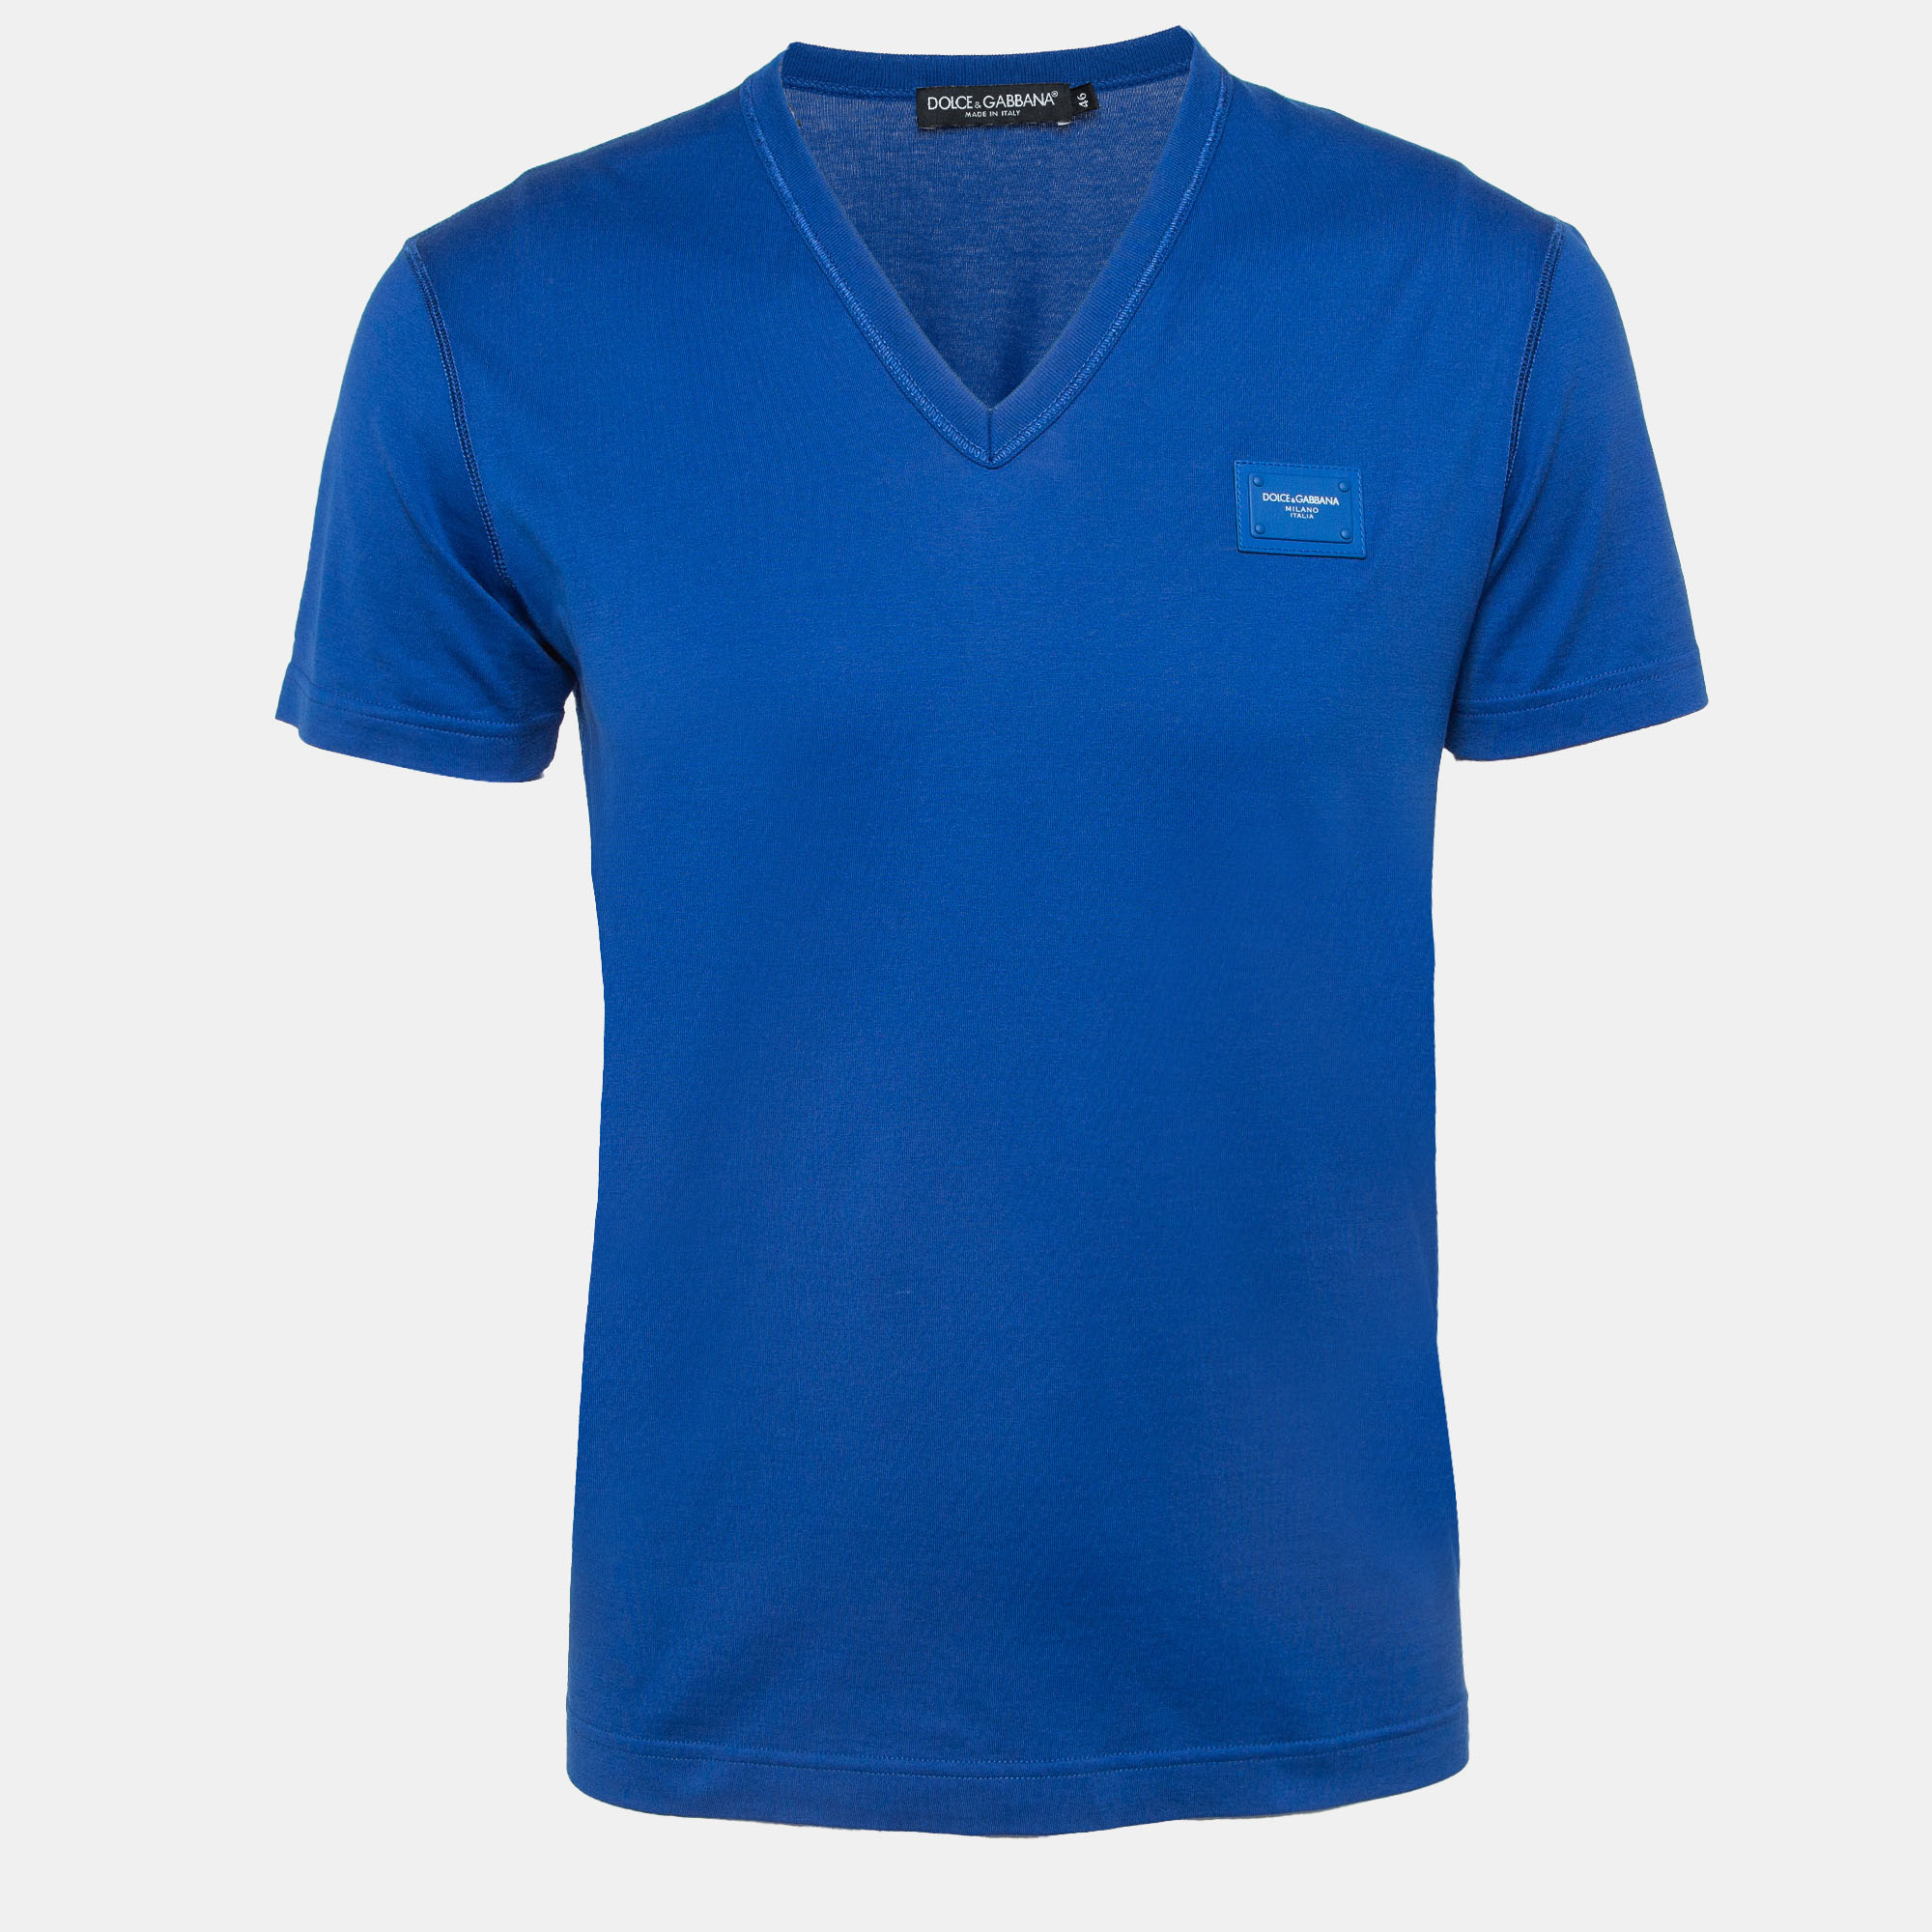 Dolce & gabbana blue logo applique cotton knit v-neck t-shirt s